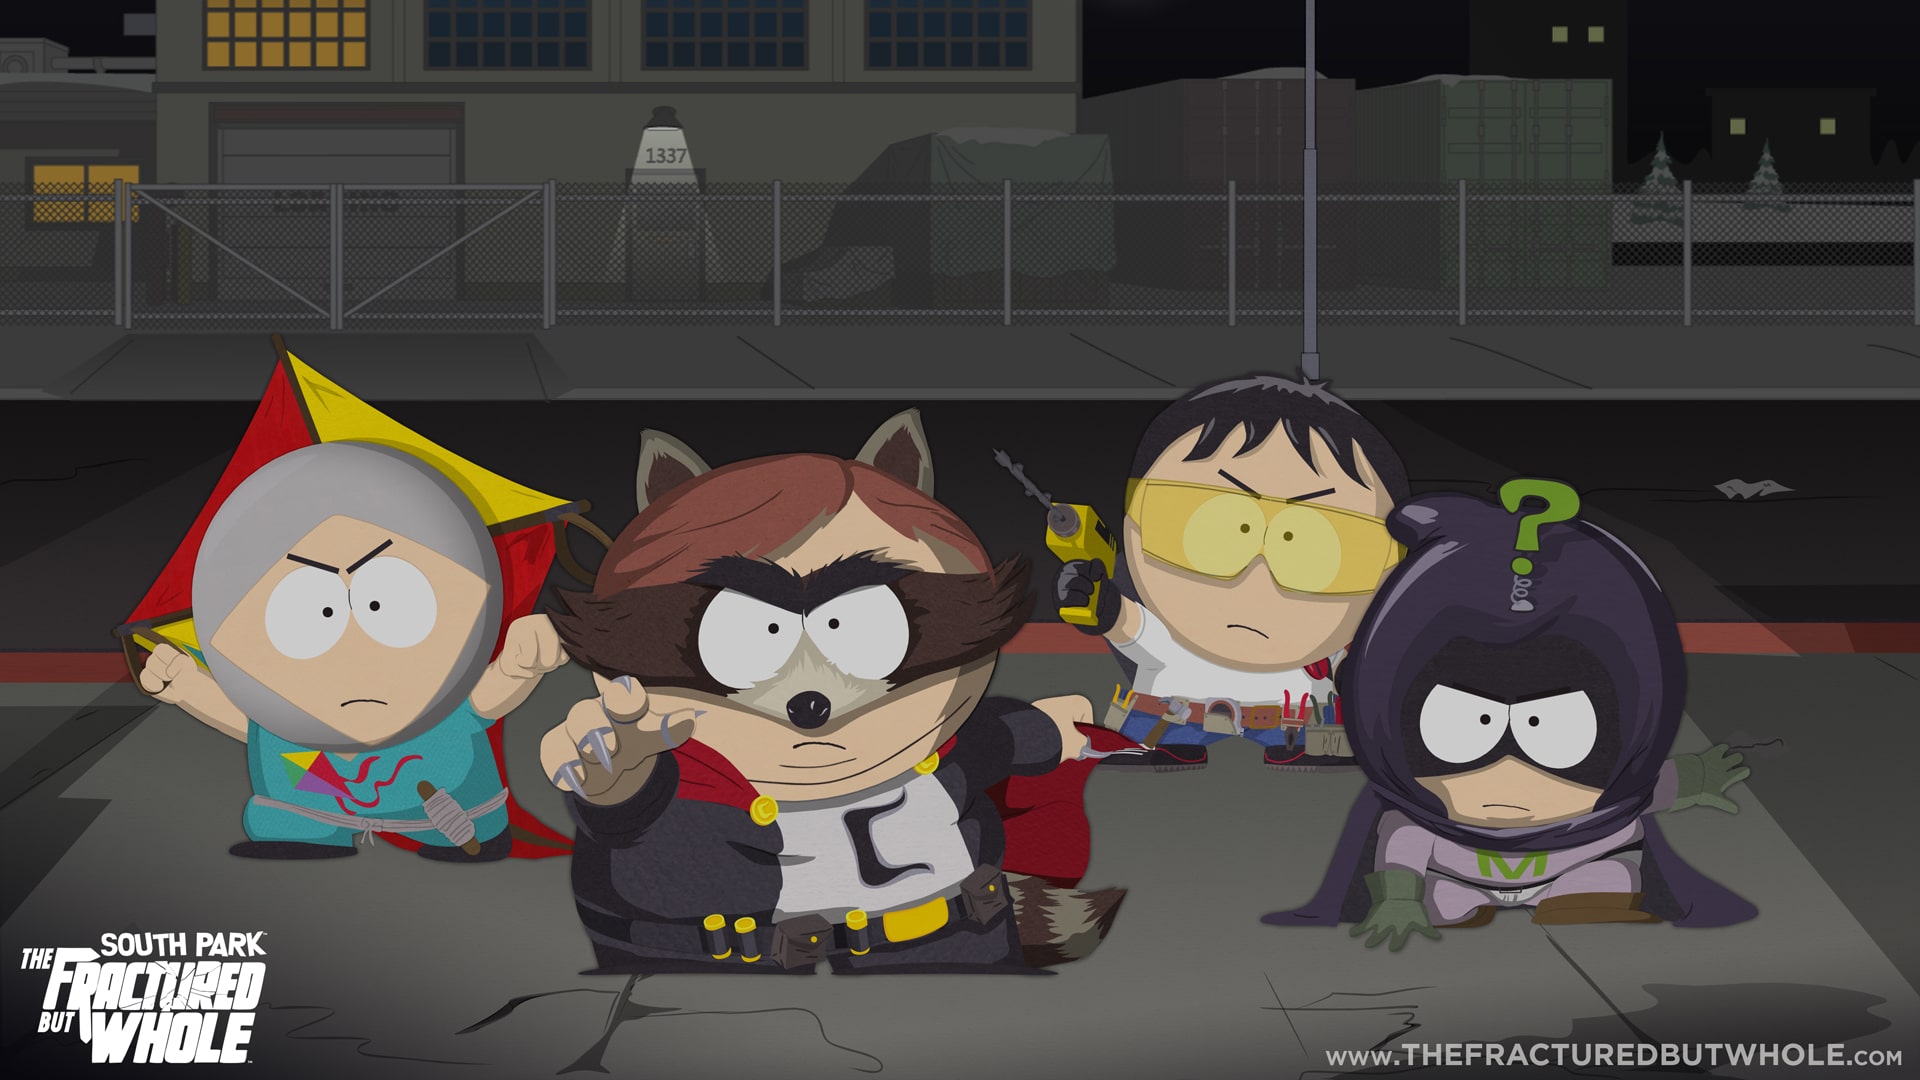 Nuevo tráiler de South Park The Fractured But Whole presentado GamersRD